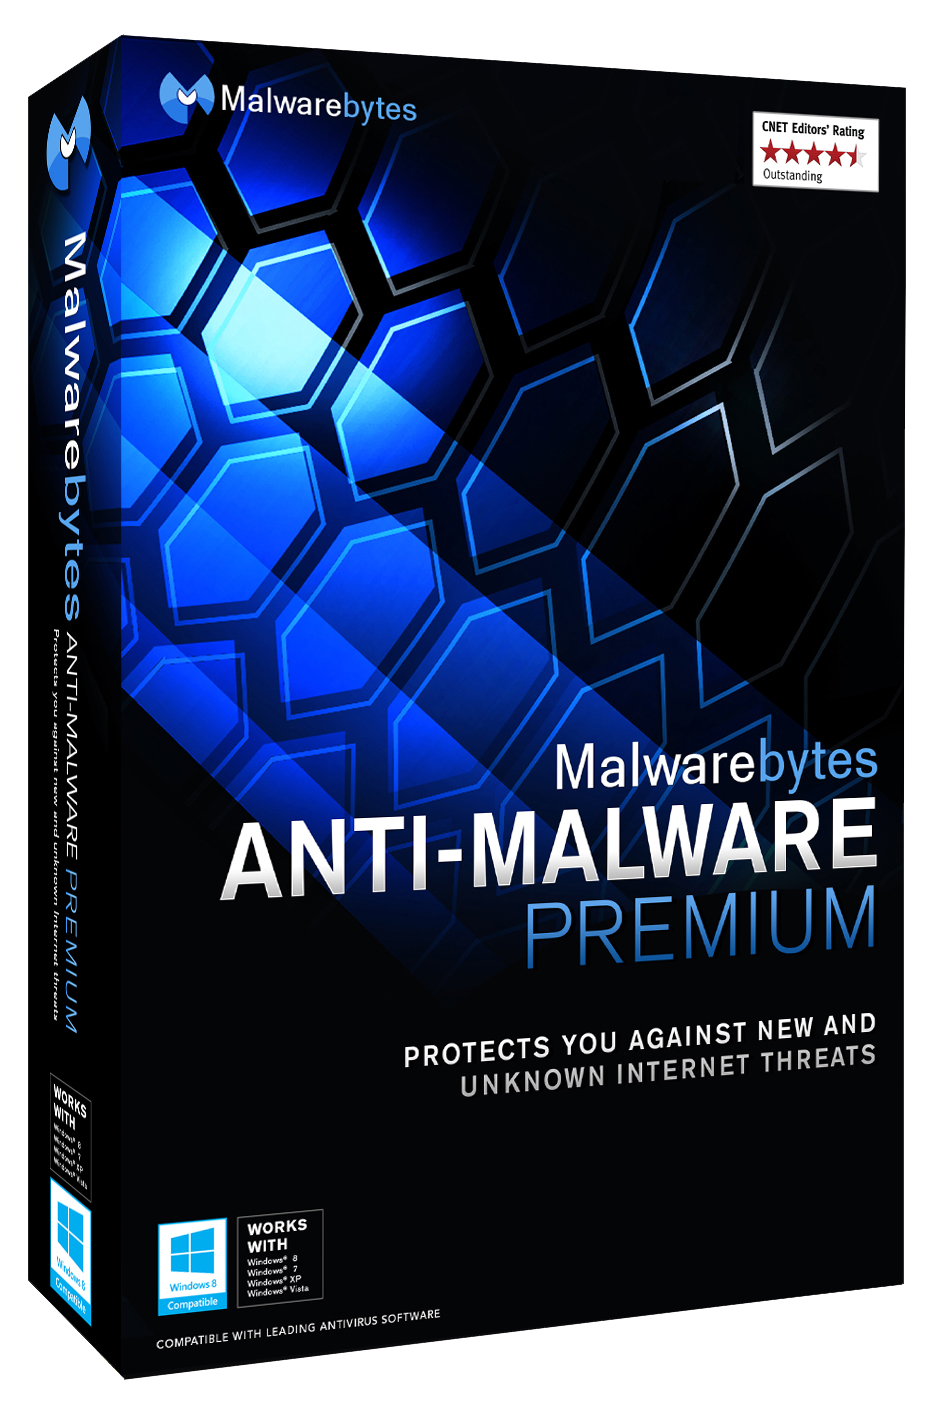 malwarebytes anti-malware premium download for win 10 tool